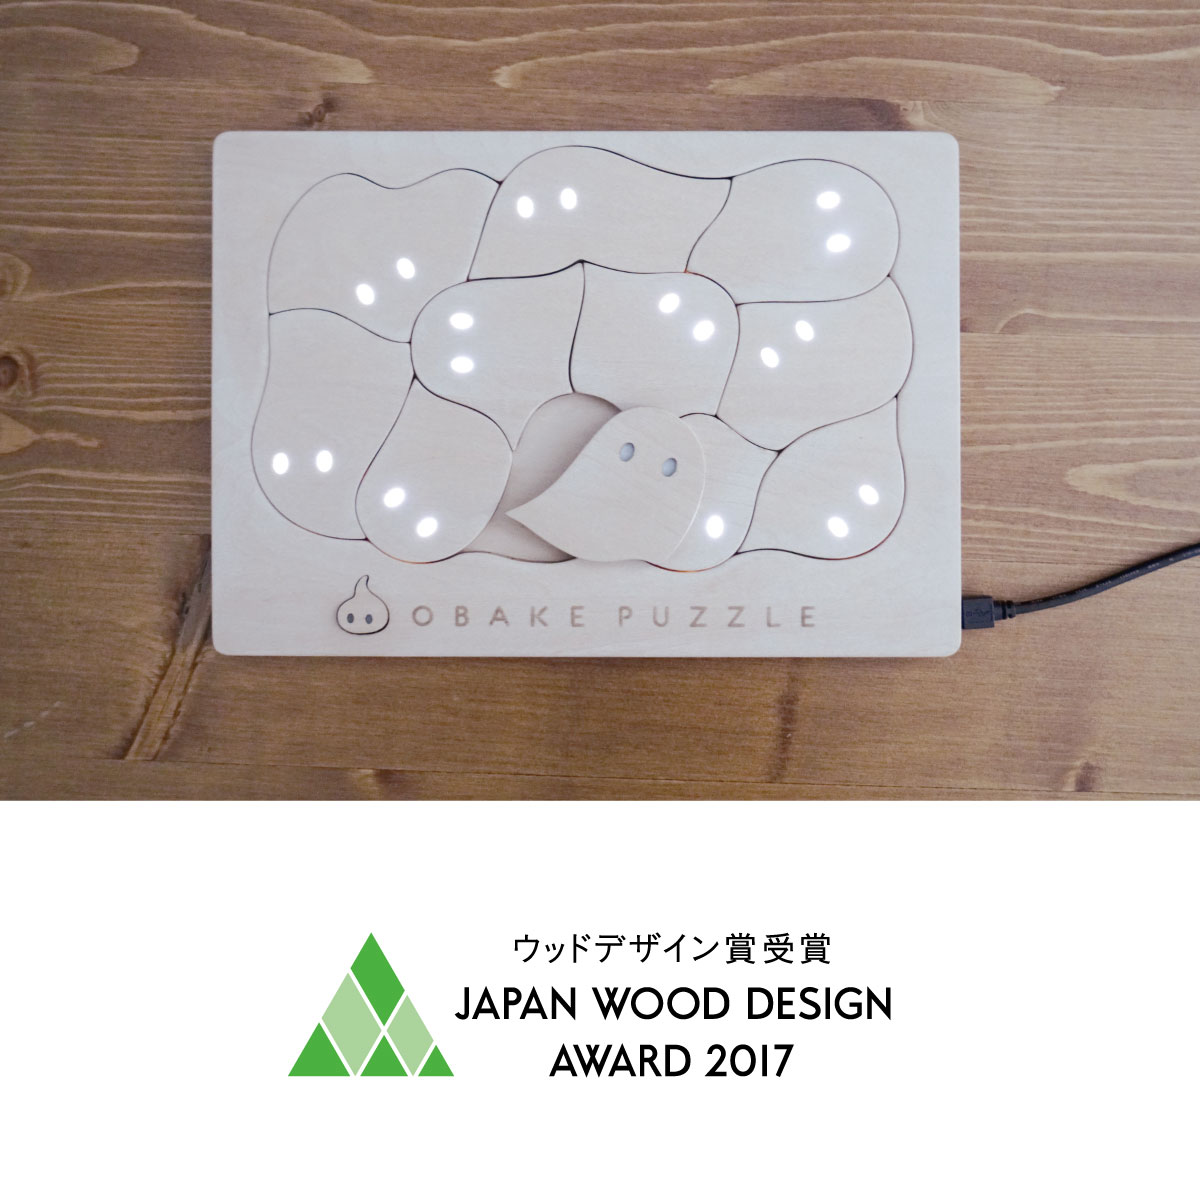 AWARD: JAPAN WOOD DESIGN AWARD 2017 Technology and Research - Health Care Design